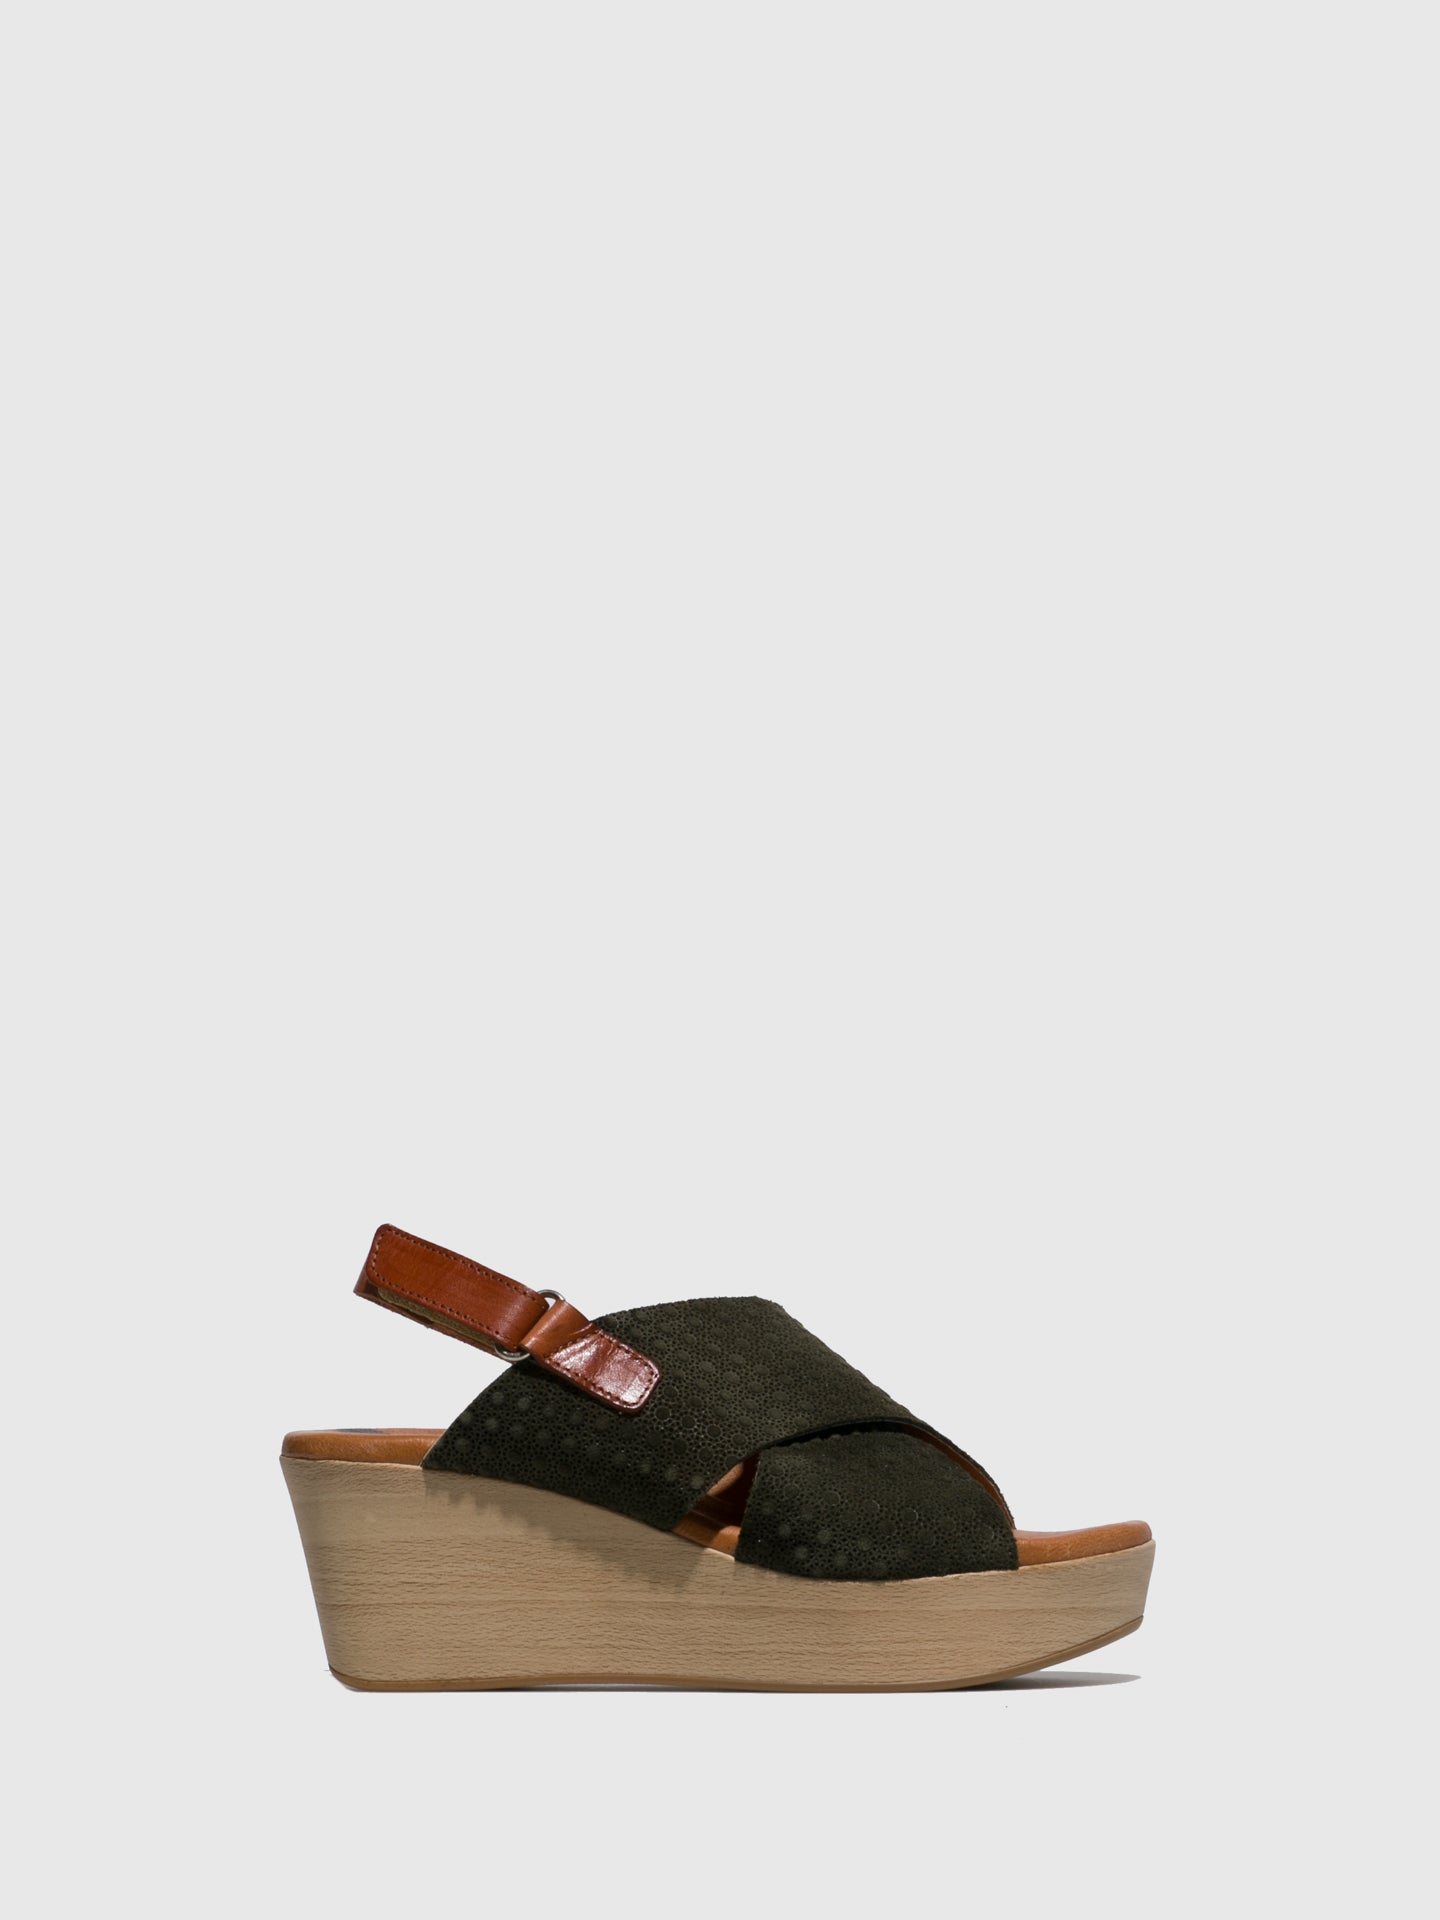 Sotoalto Olive Wedge Sandals